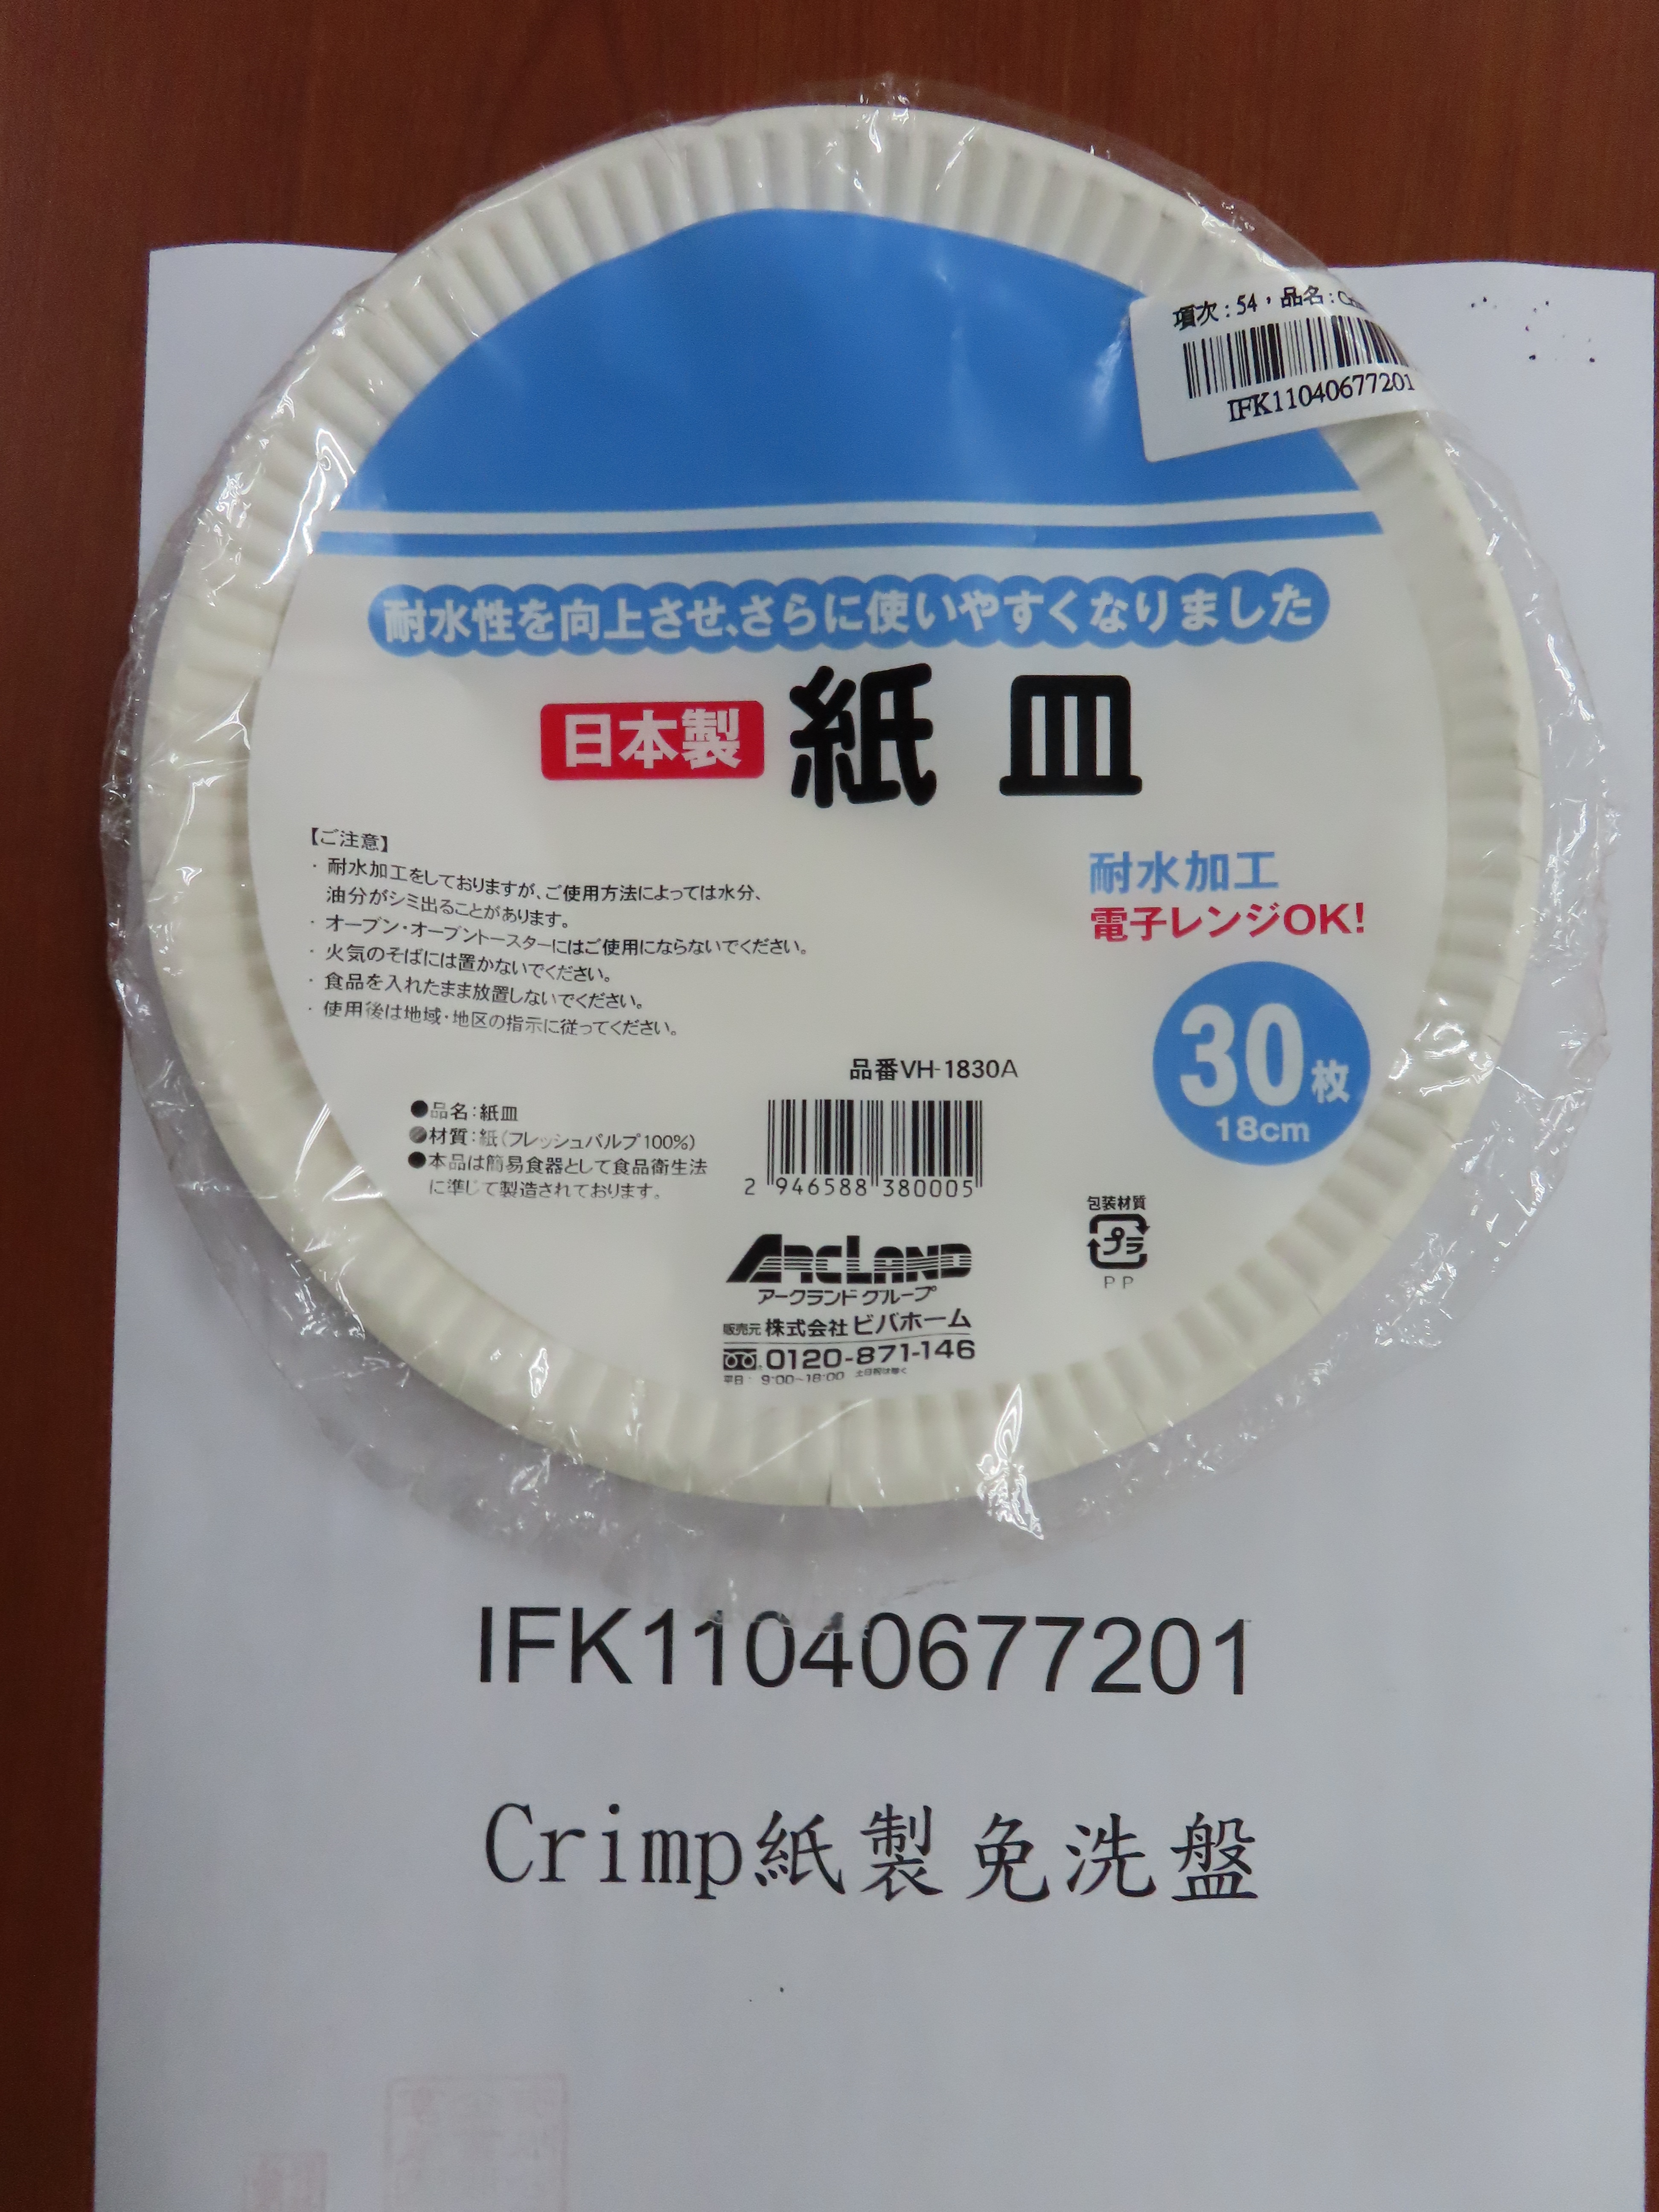 Crimp 紙製免洗盤 18cm(30入)(B1626 PAPER PLATE)